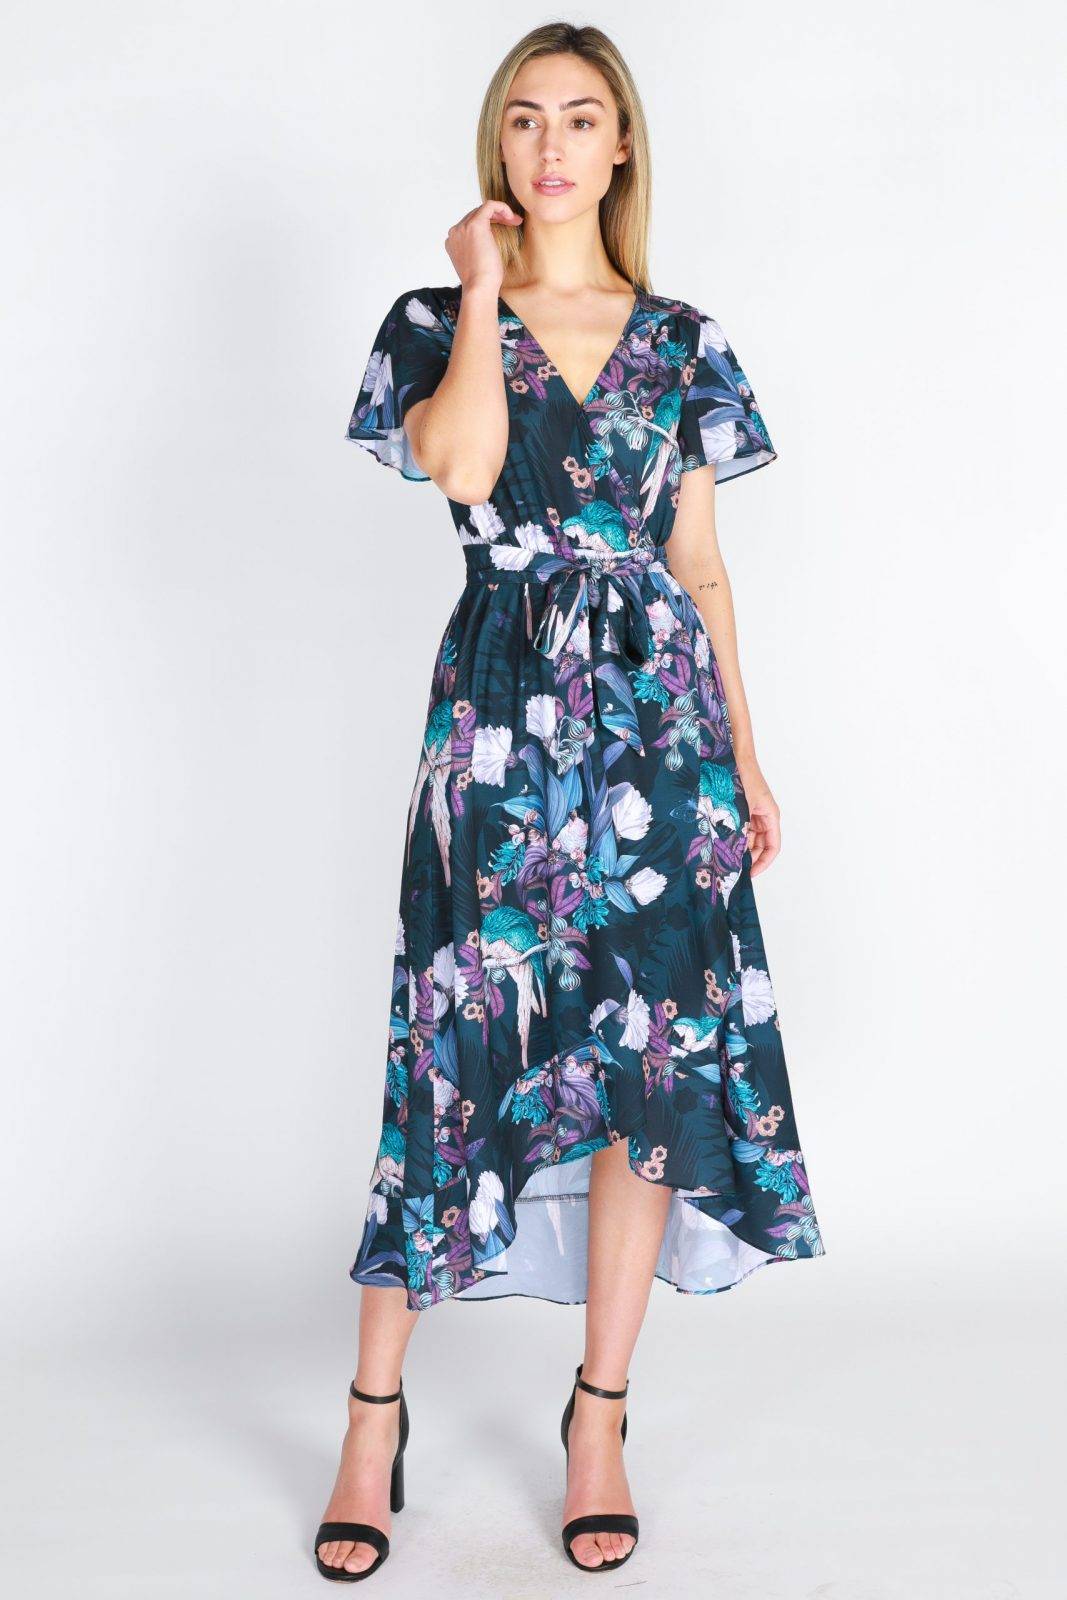 Carmel Dress - Florence Store - Women's Boutique Fashion - Online Australia